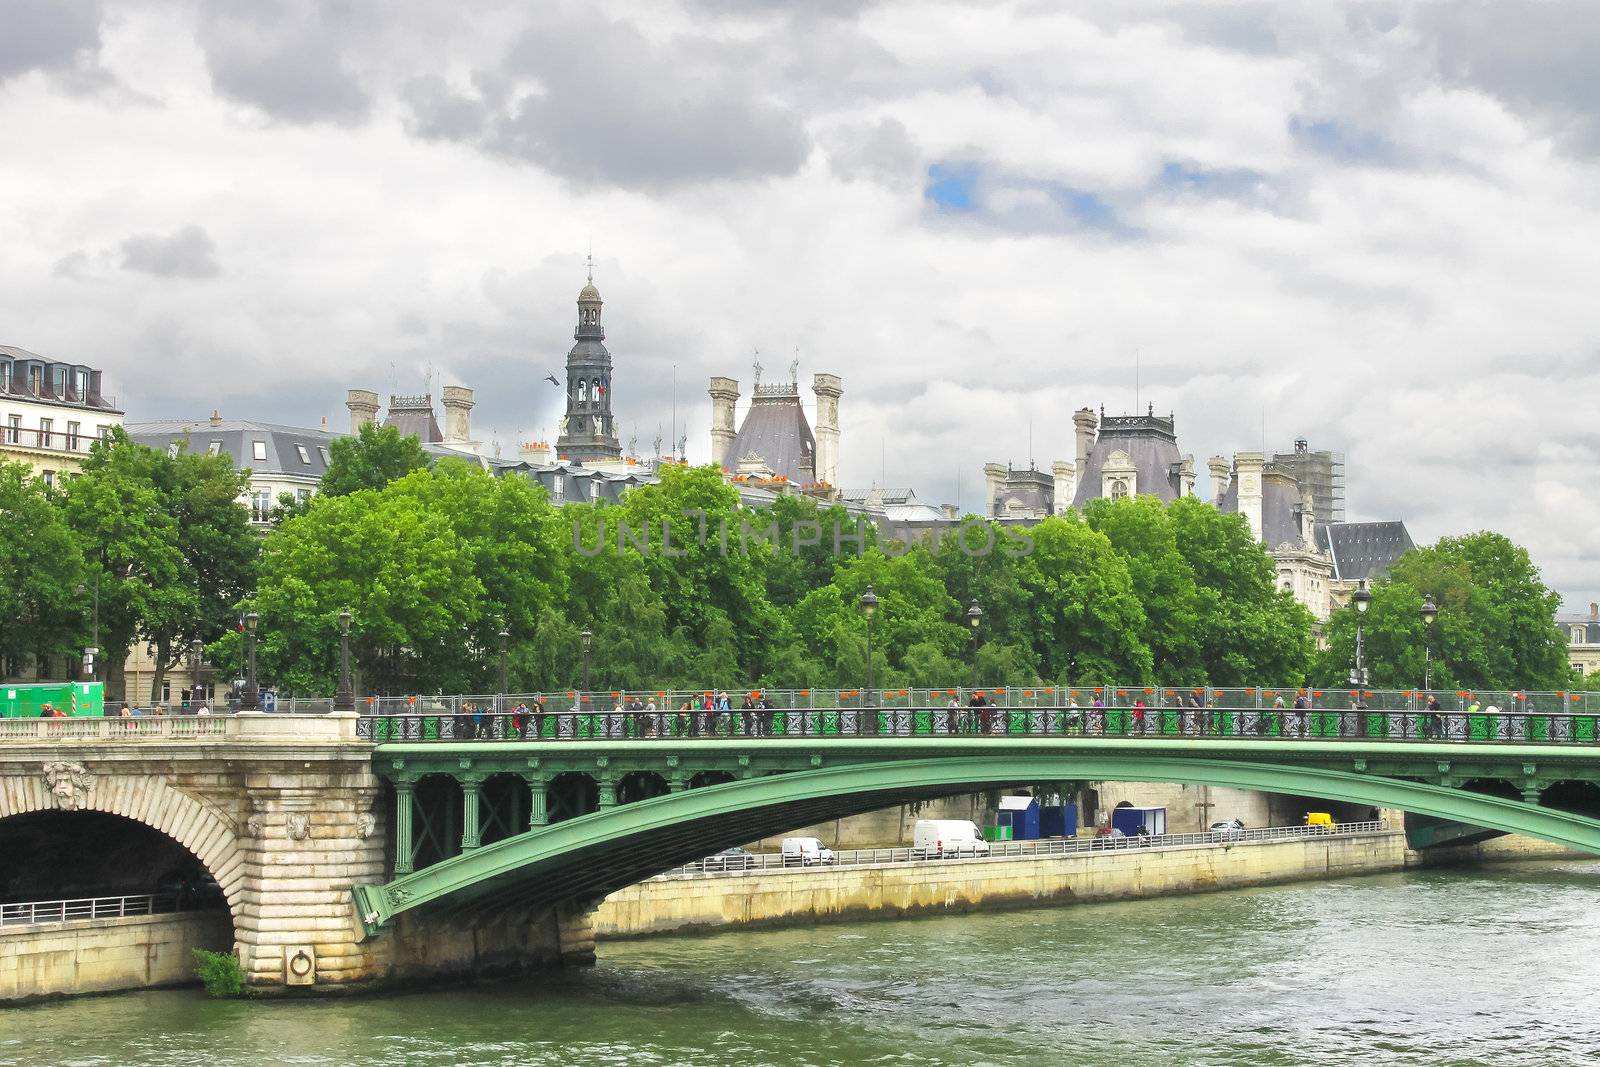 Bridge over the Seine. Paris. France by NickNick